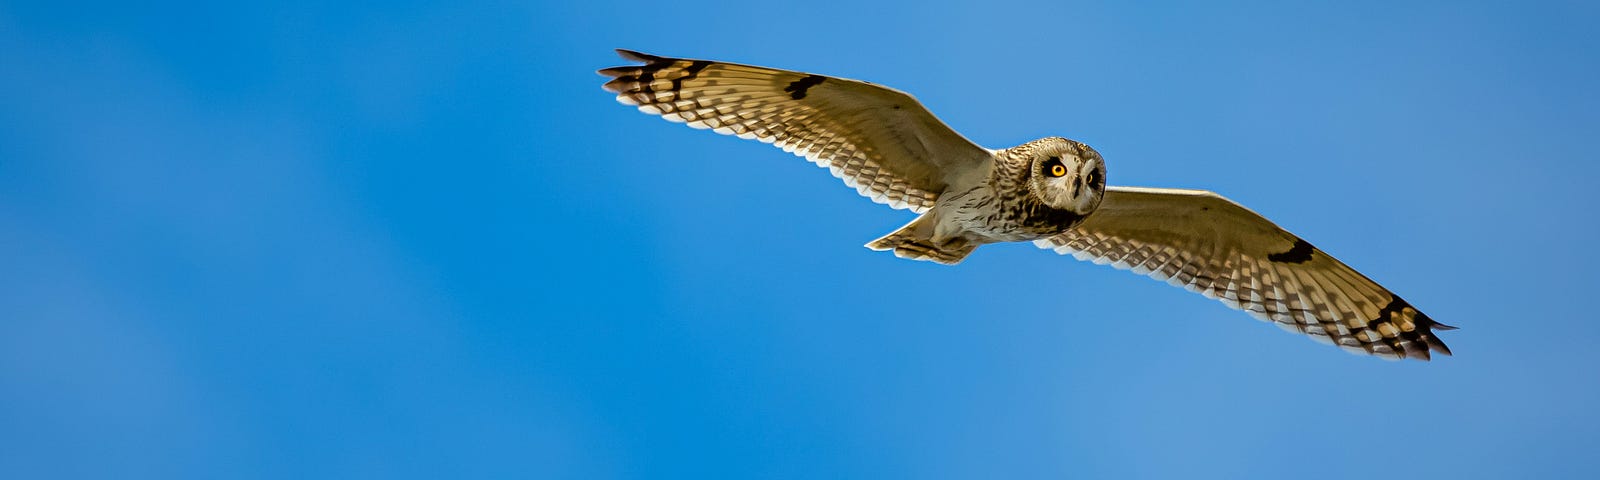 A flying Owl